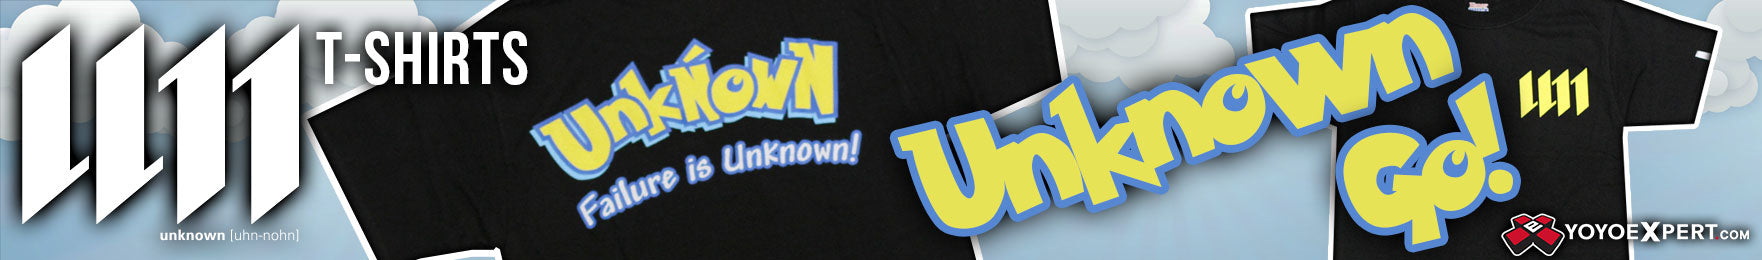 unknown go t-shirt